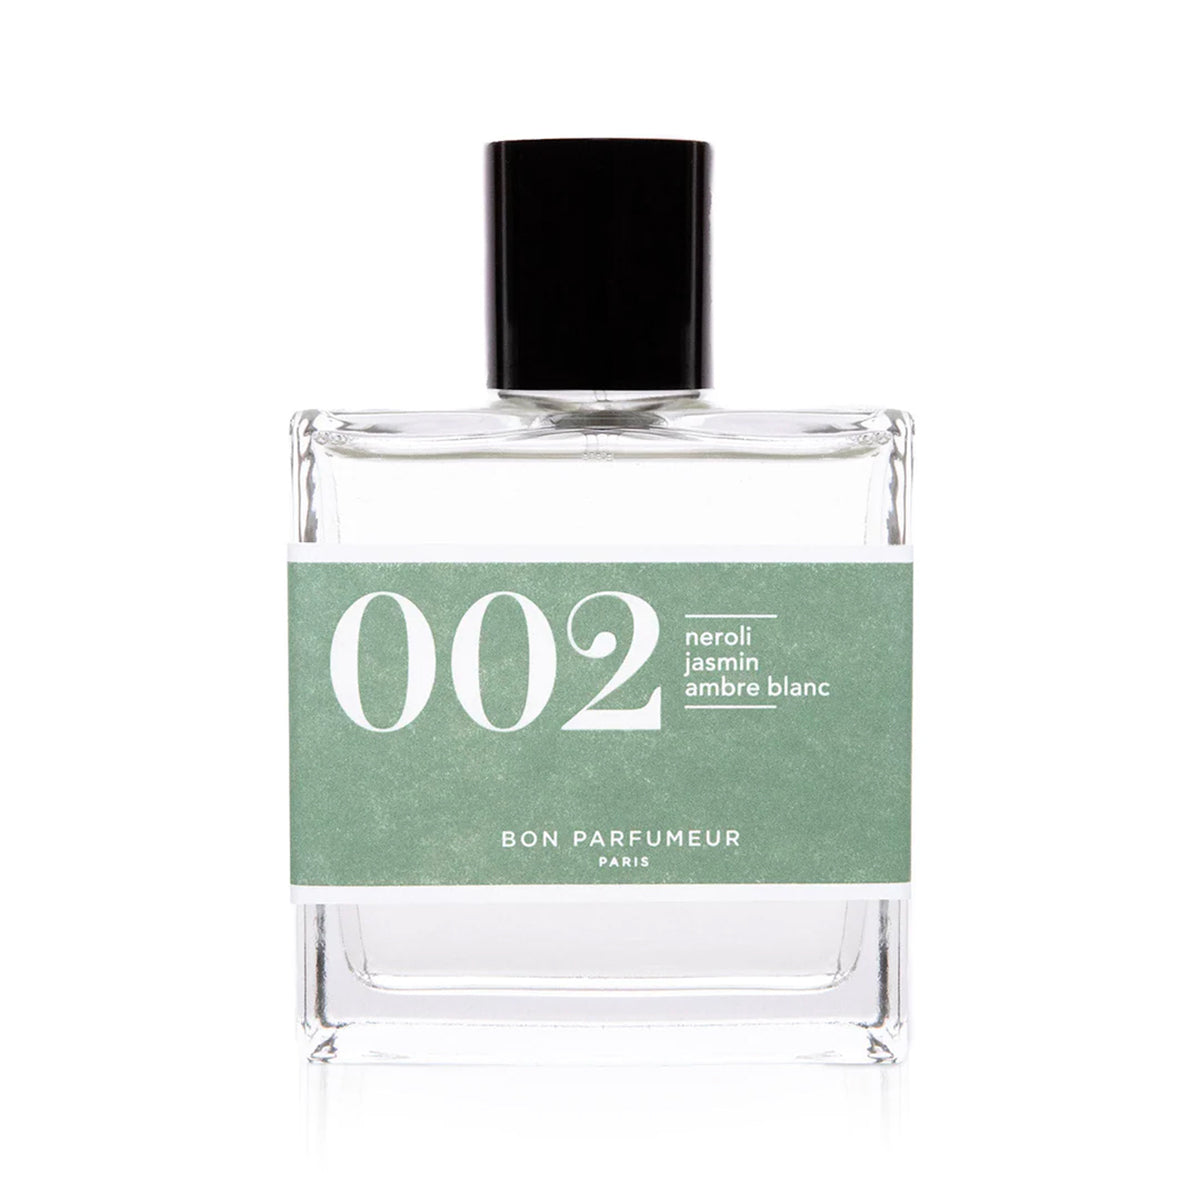 002 by Bon Parfumeur at Indigo Perfumery